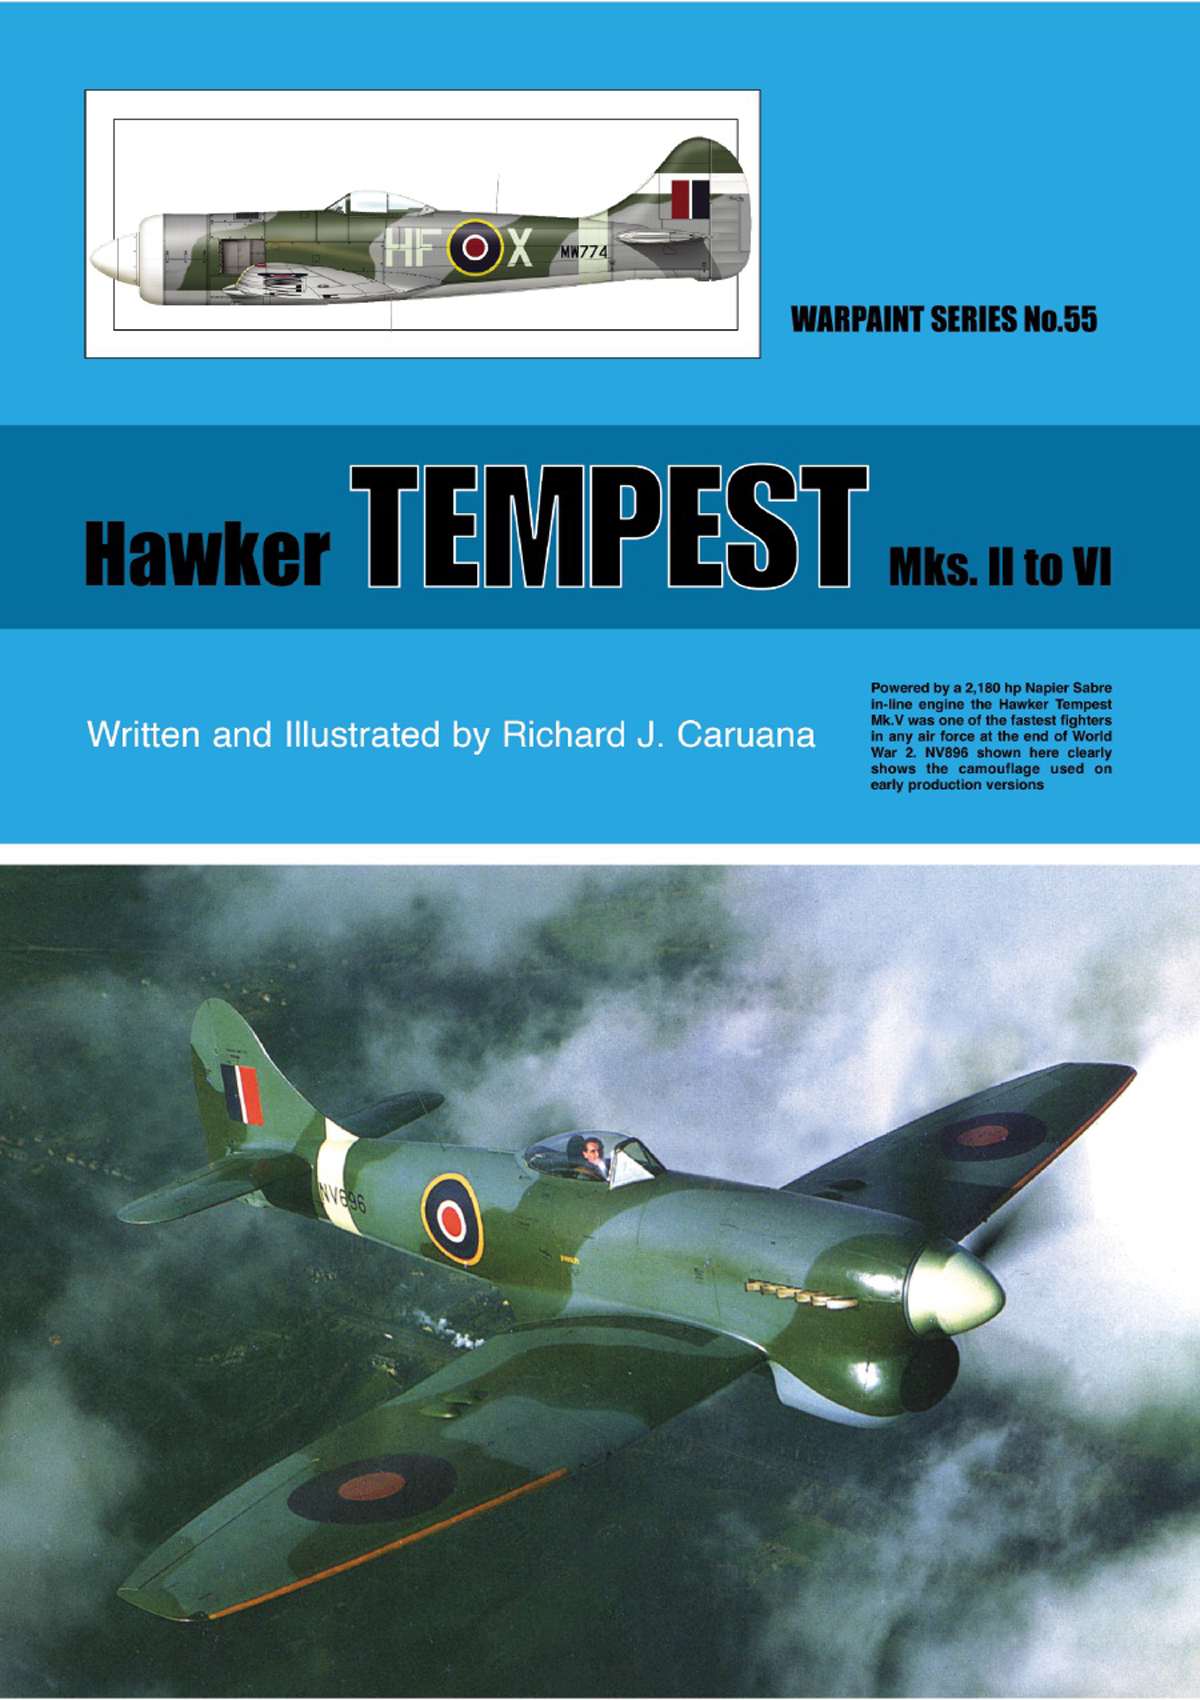 N55 - Hawker Tempest Mks.II to VI